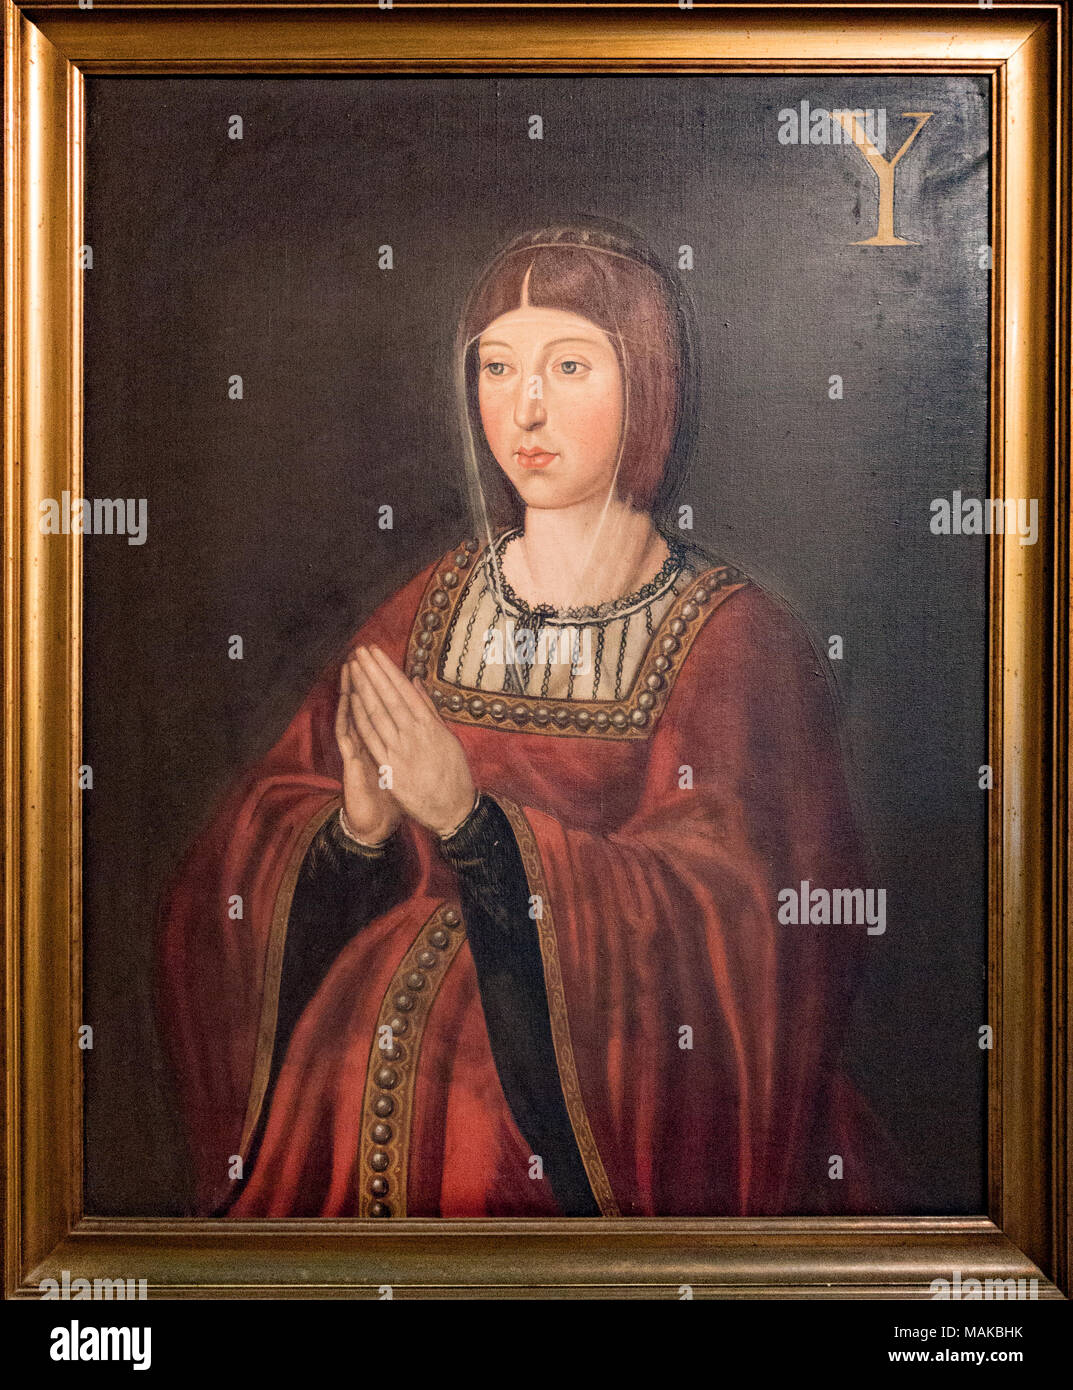 Portrait of Queen Isabella 1 of Castile. Stock Photo